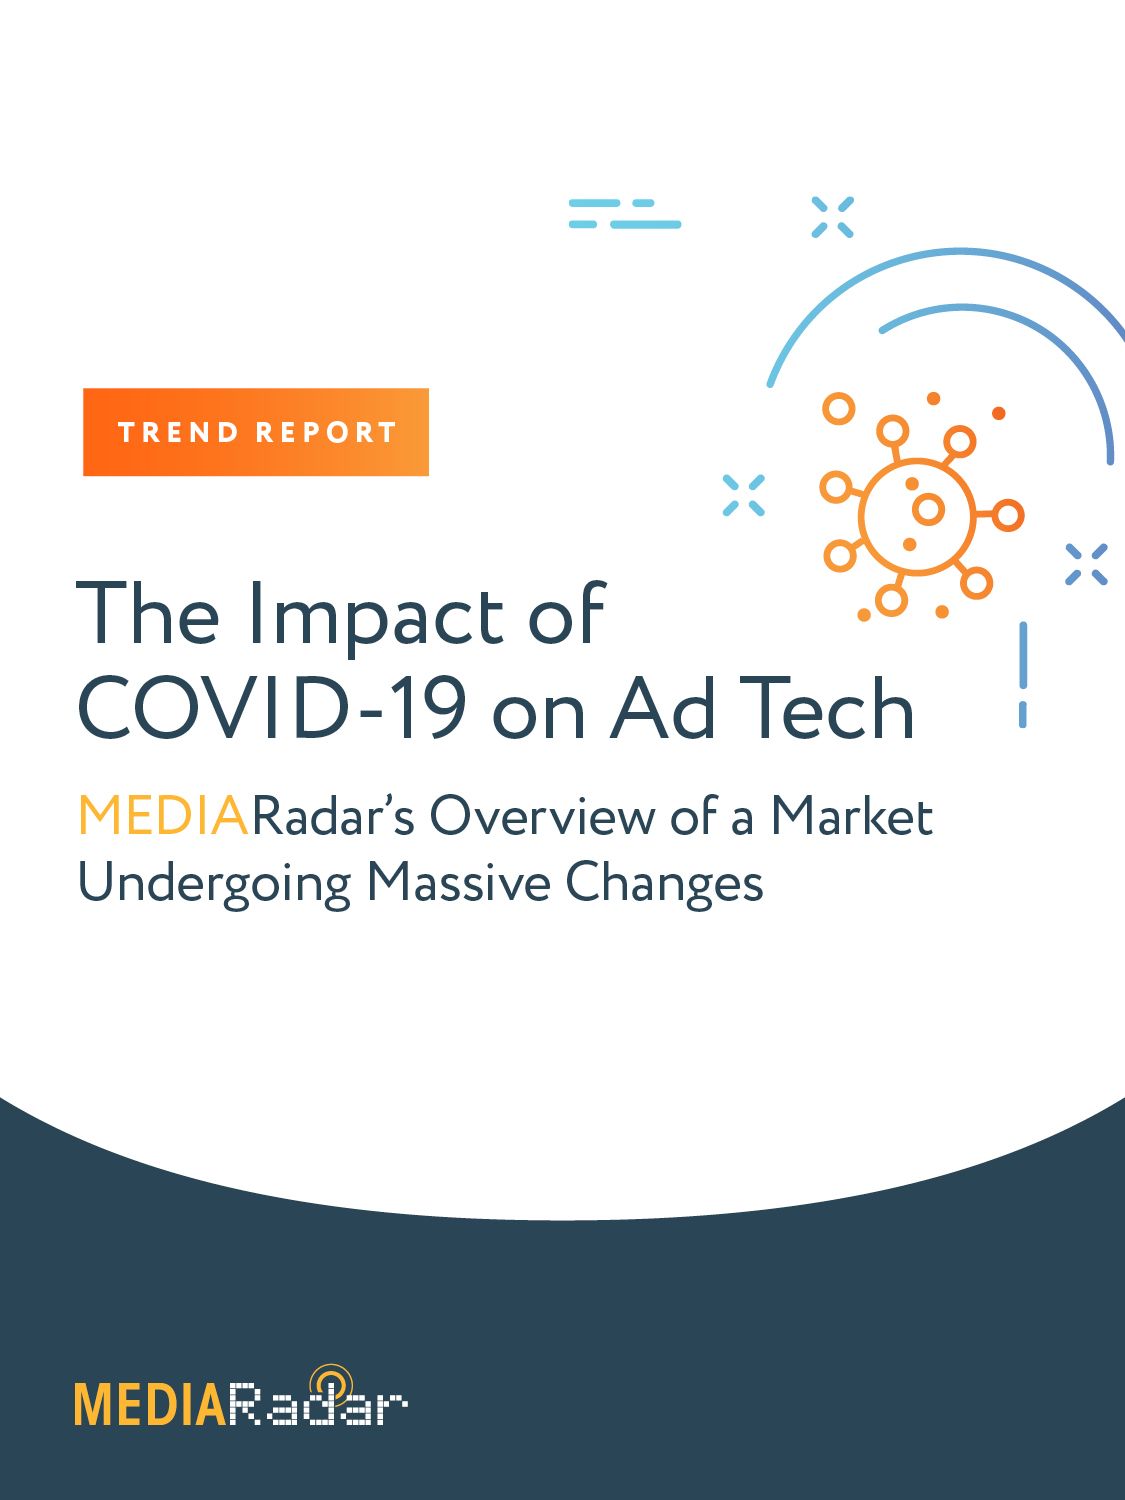 MediaRadar COVID-19 Ad Tech Trend Report